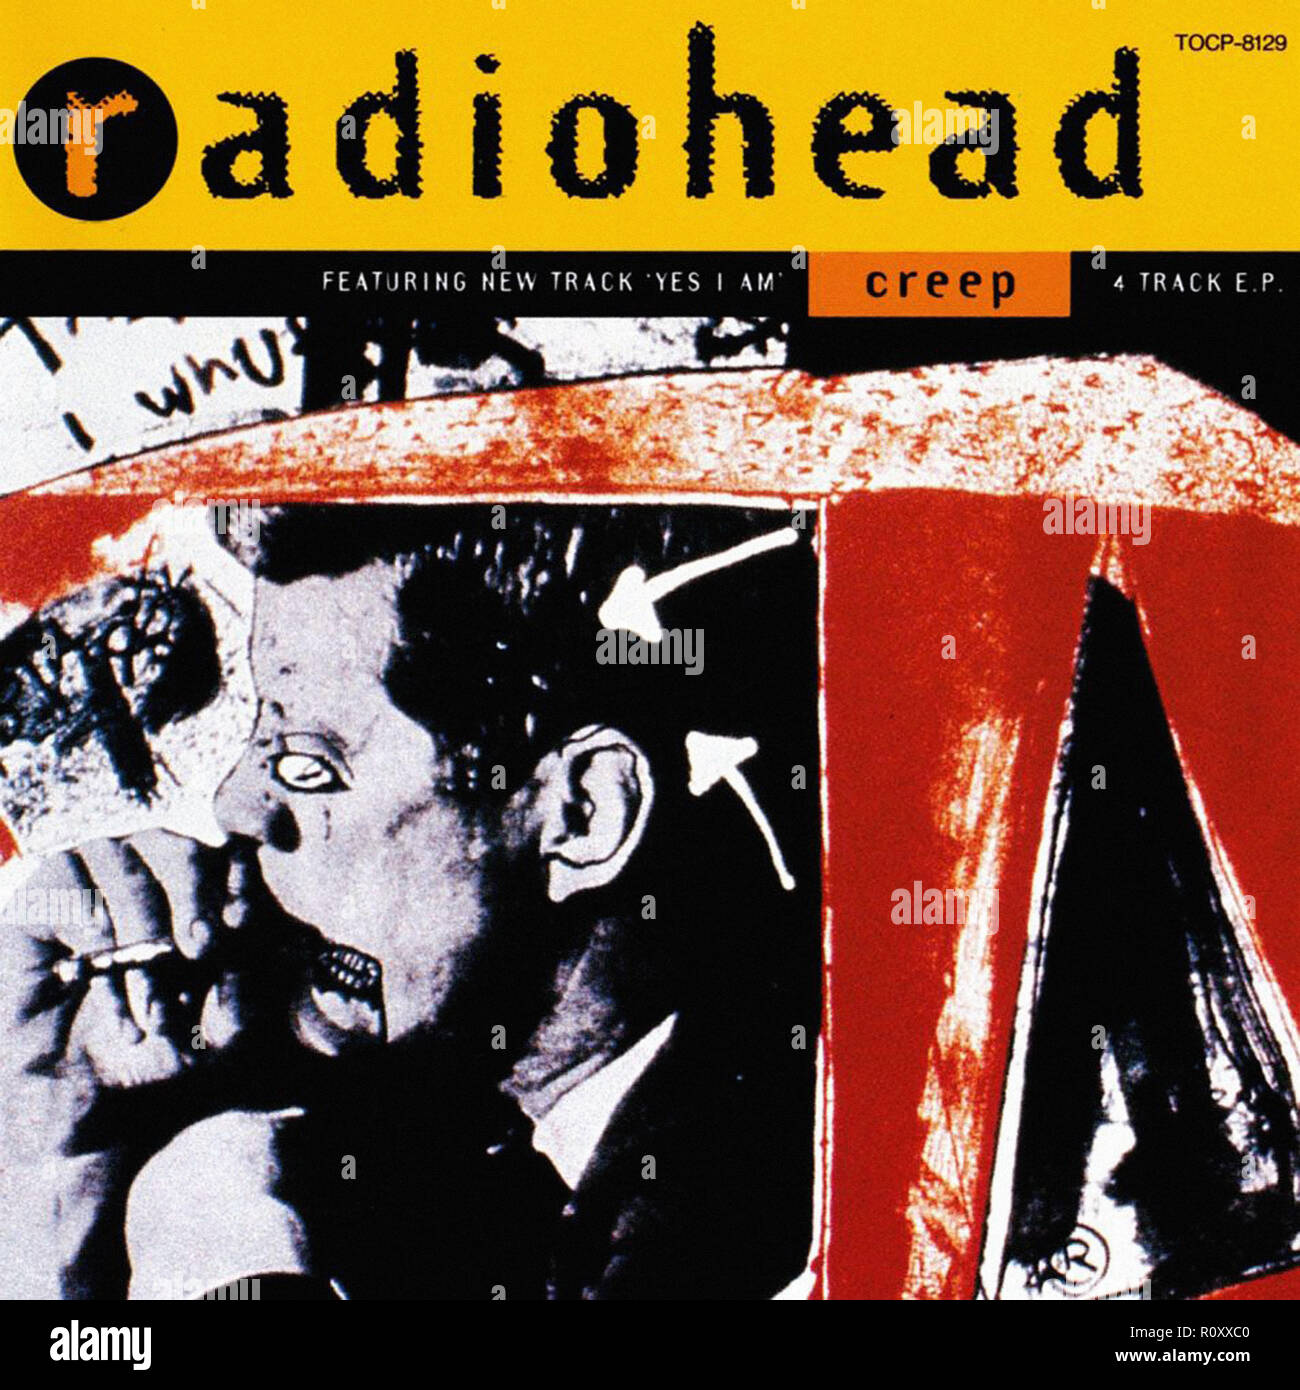 radiohead album covers